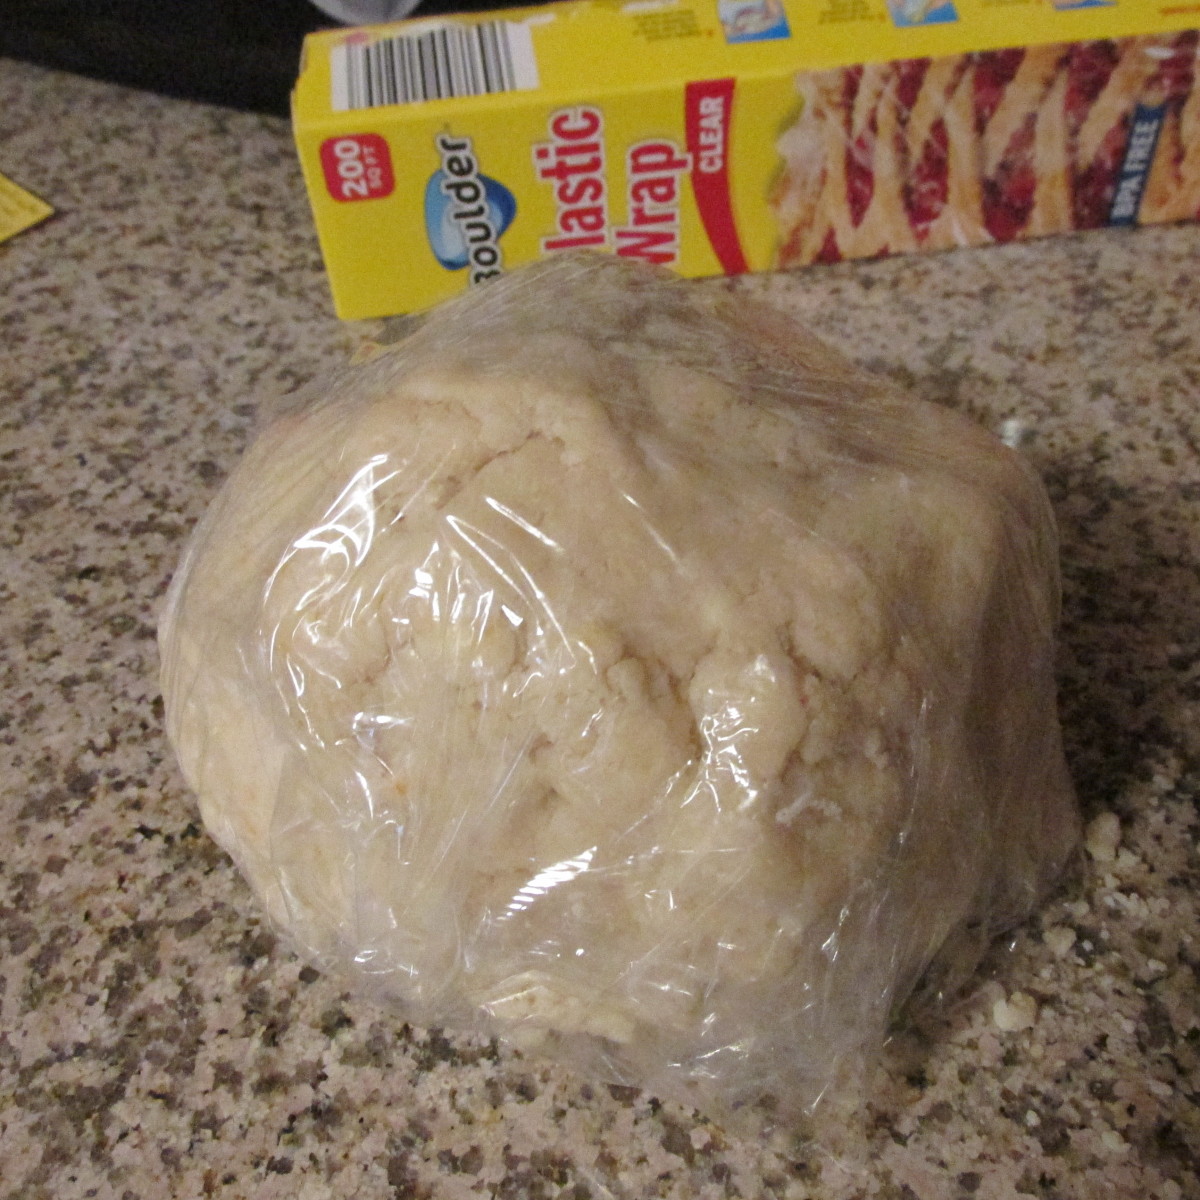 Wrap cookie dough in plastic wrap.